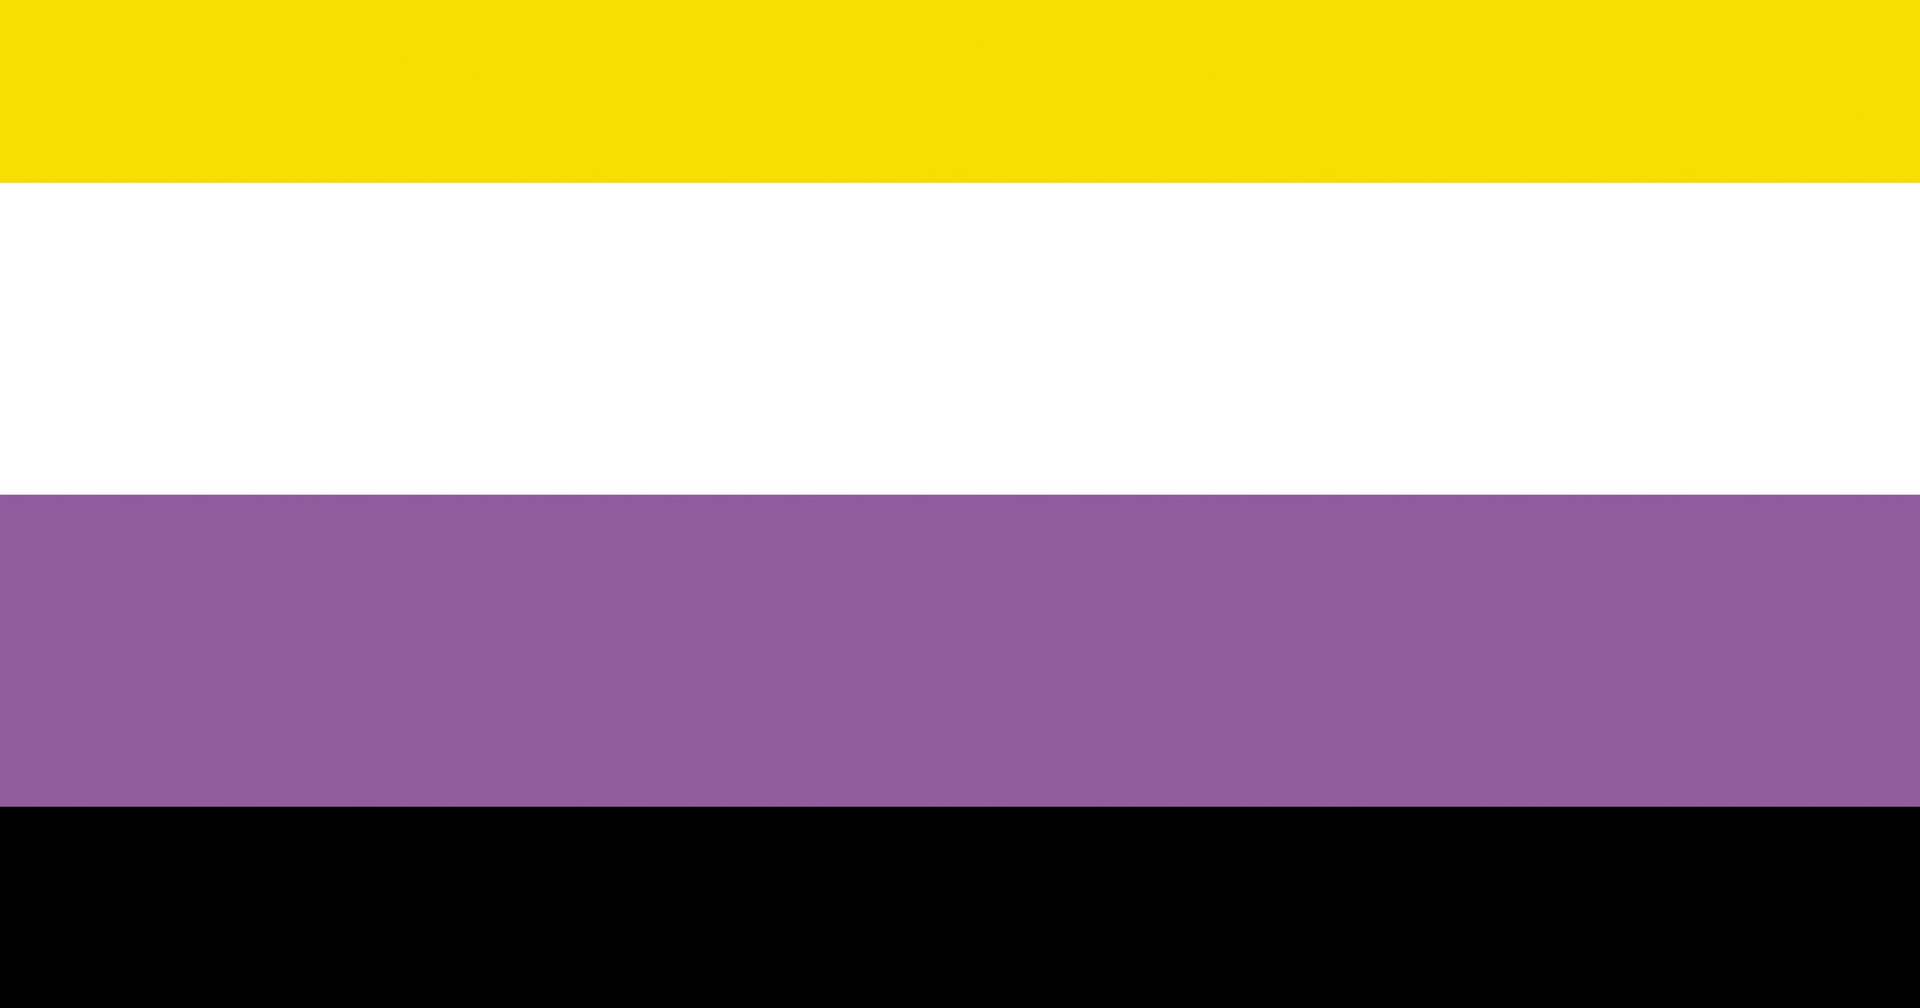 Horizontal Nonbinary Gender Pride Flag Wallpaper